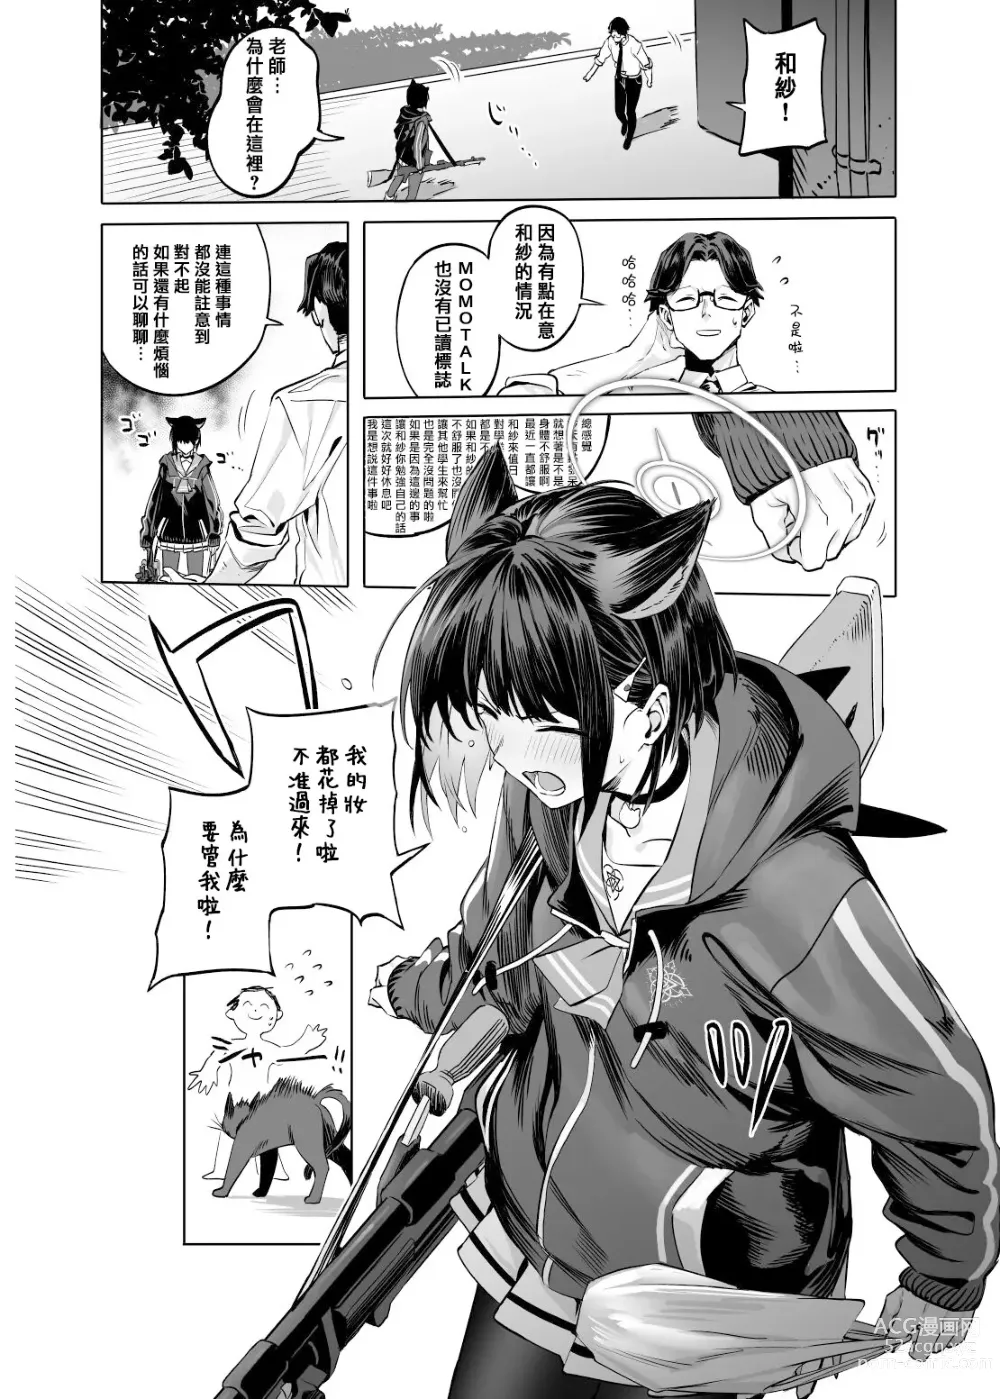 Page 26 of doujinshi Kyouyama Kazusa no Torisetsu - Tetourner le Chat dans la casserole